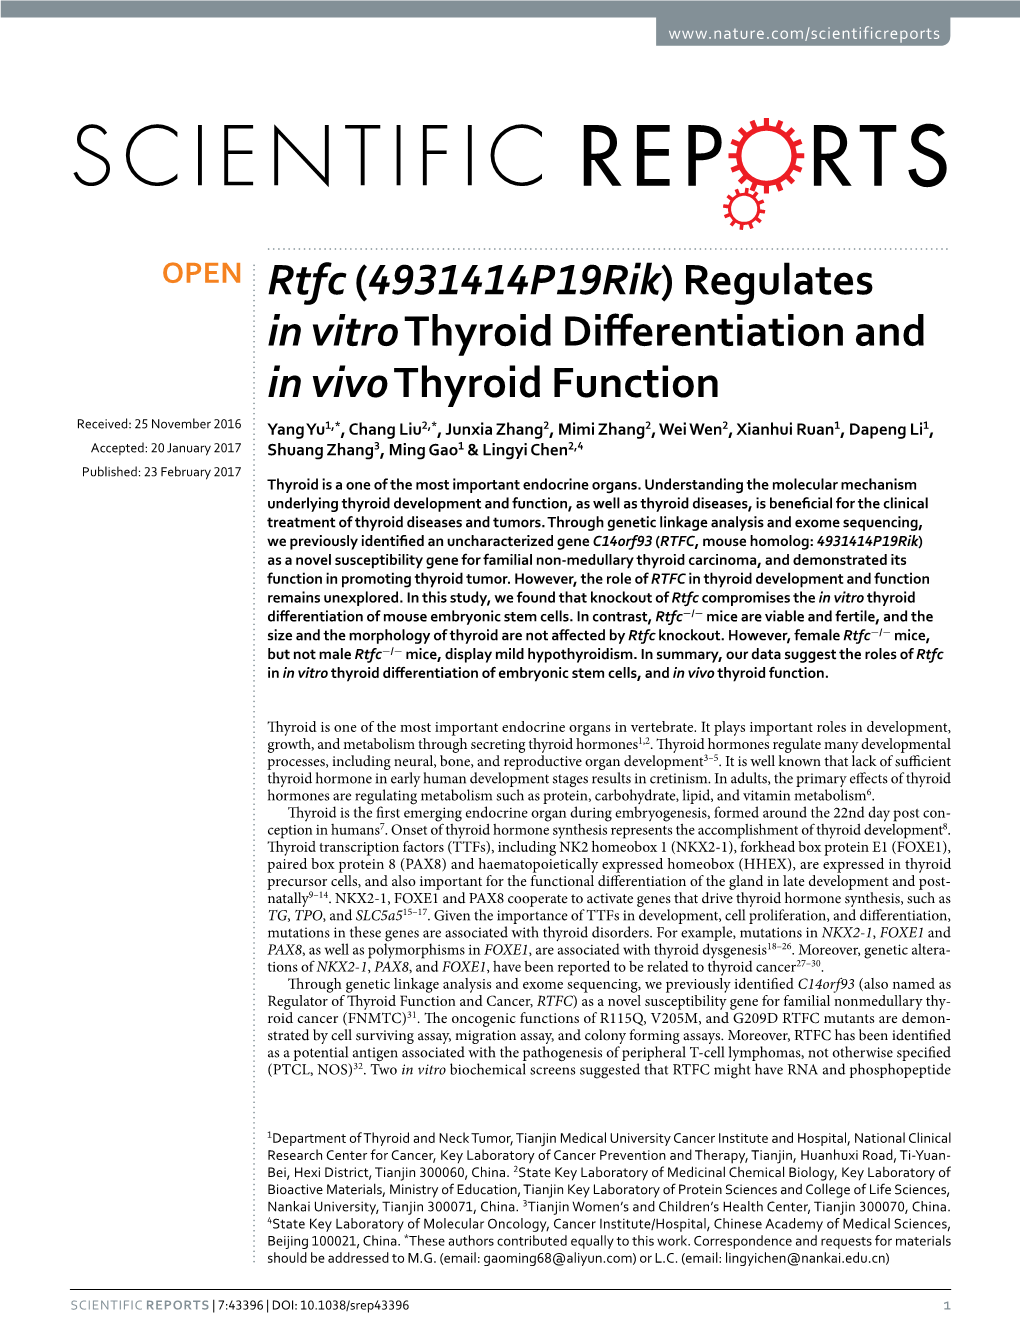 Rtfc (4931414P19rik) Regulates in Vitro Thyroid Differentiation